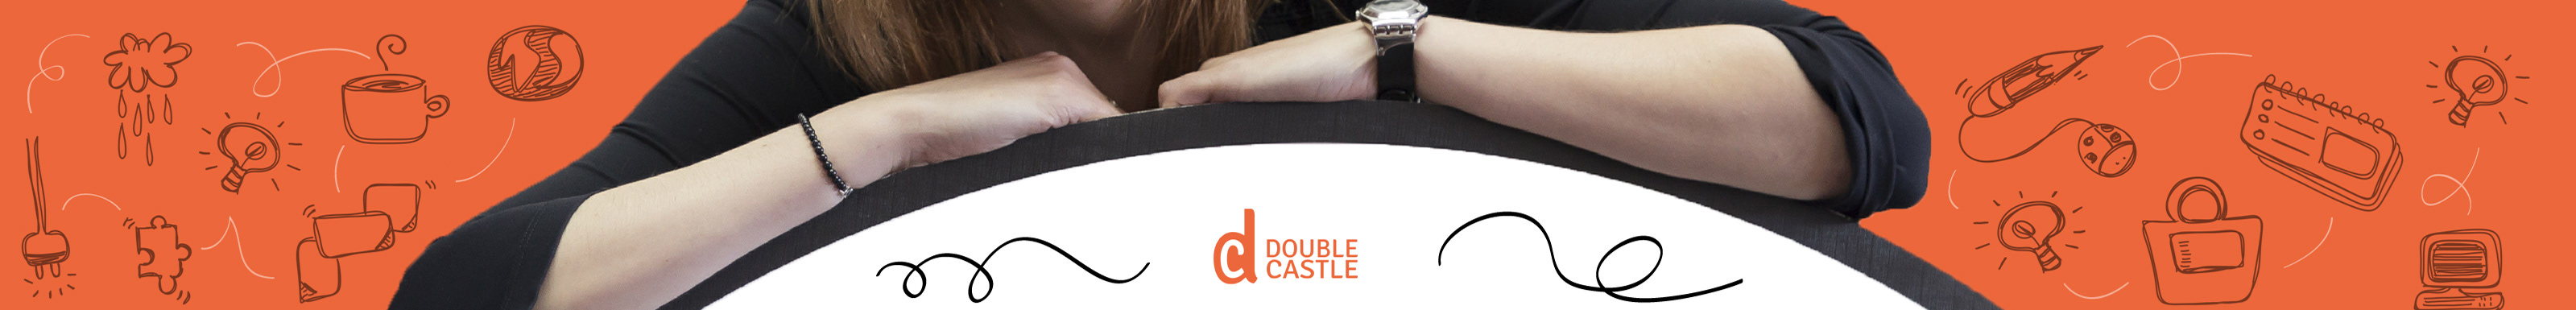 Double Castles profilbanner